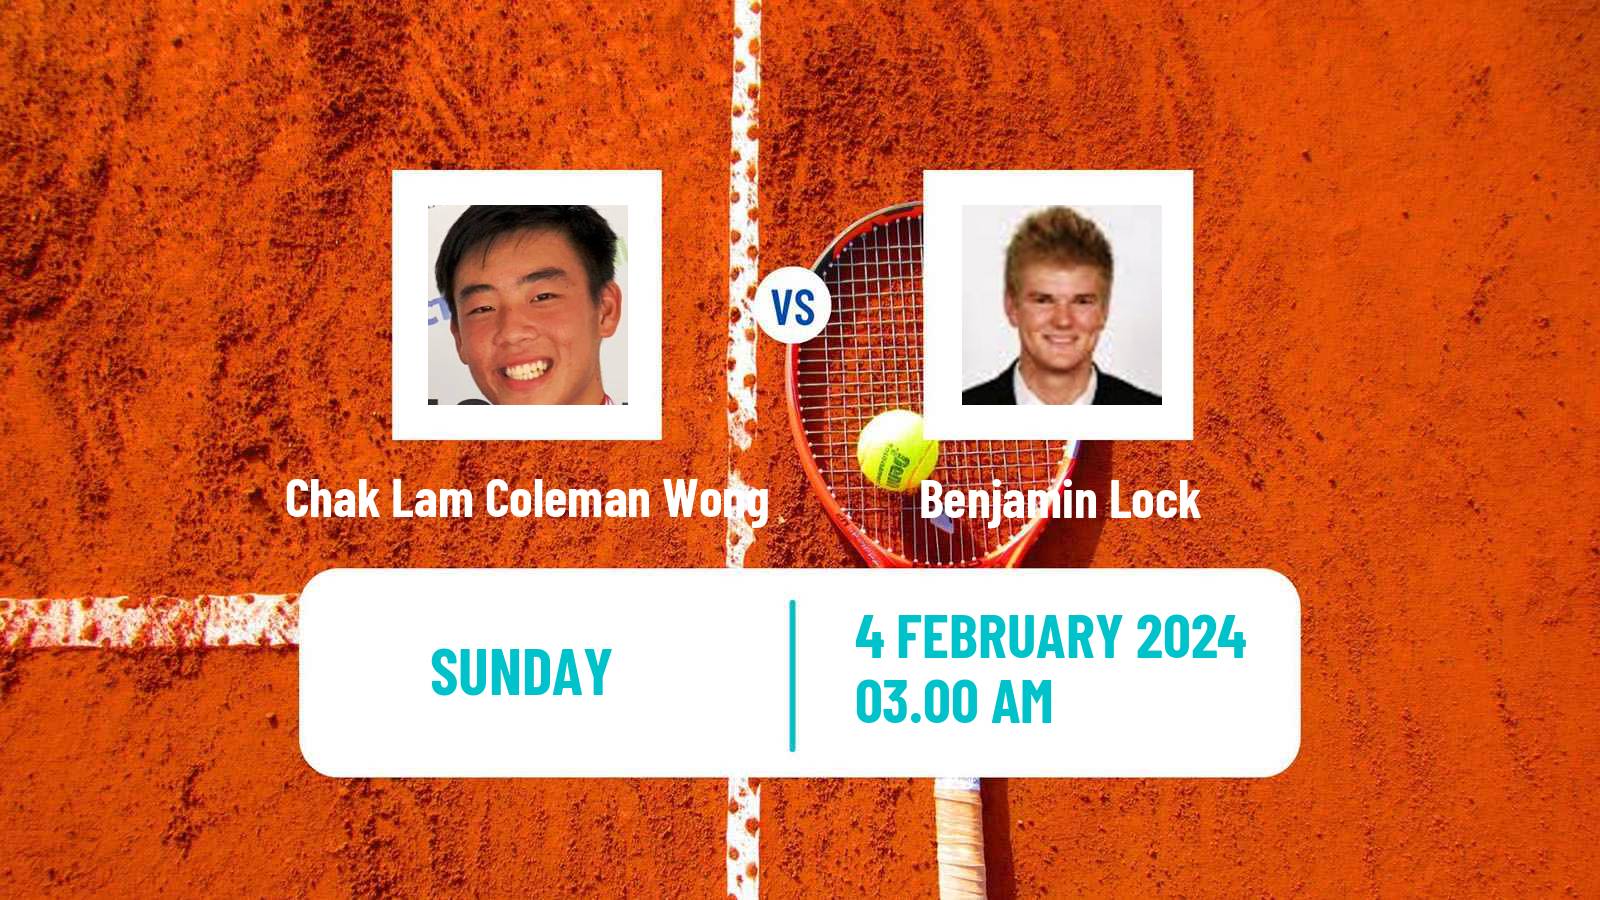 Tennis Davis Cup World Group II Chak Lam Coleman Wong - Benjamin Lock